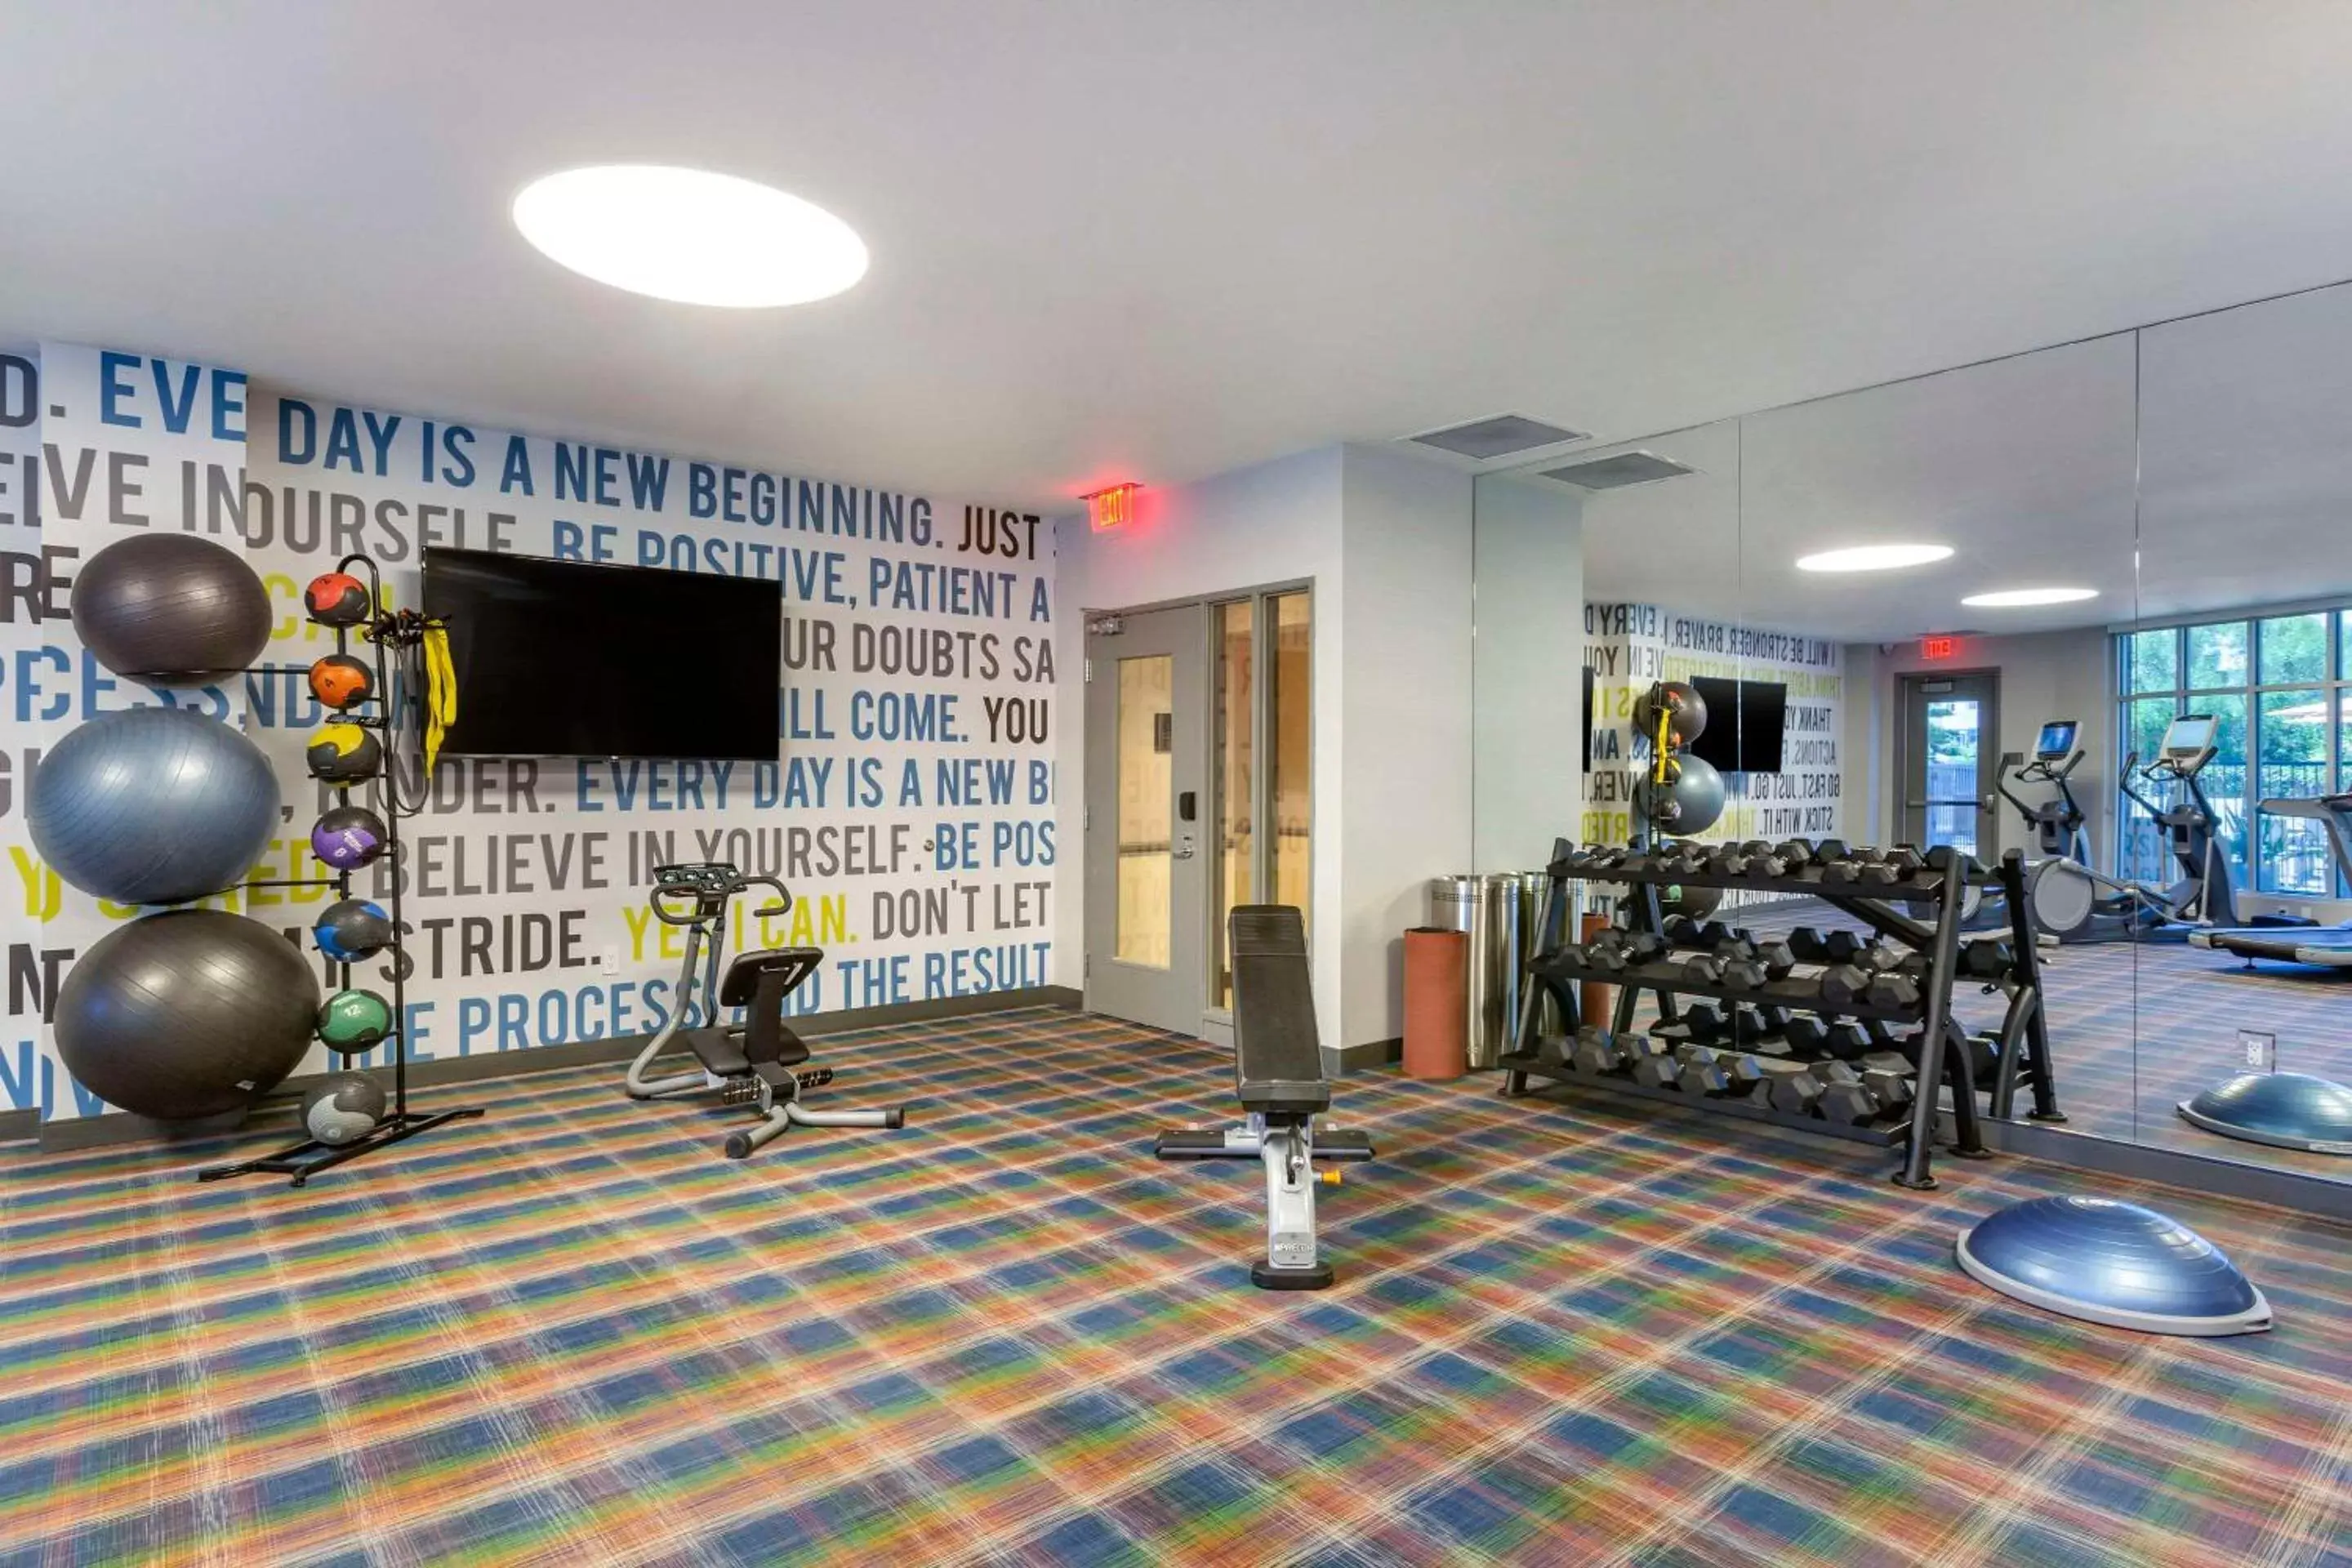 Fitness centre/facilities, Fitness Center/Facilities in Cambria Hotel LAX